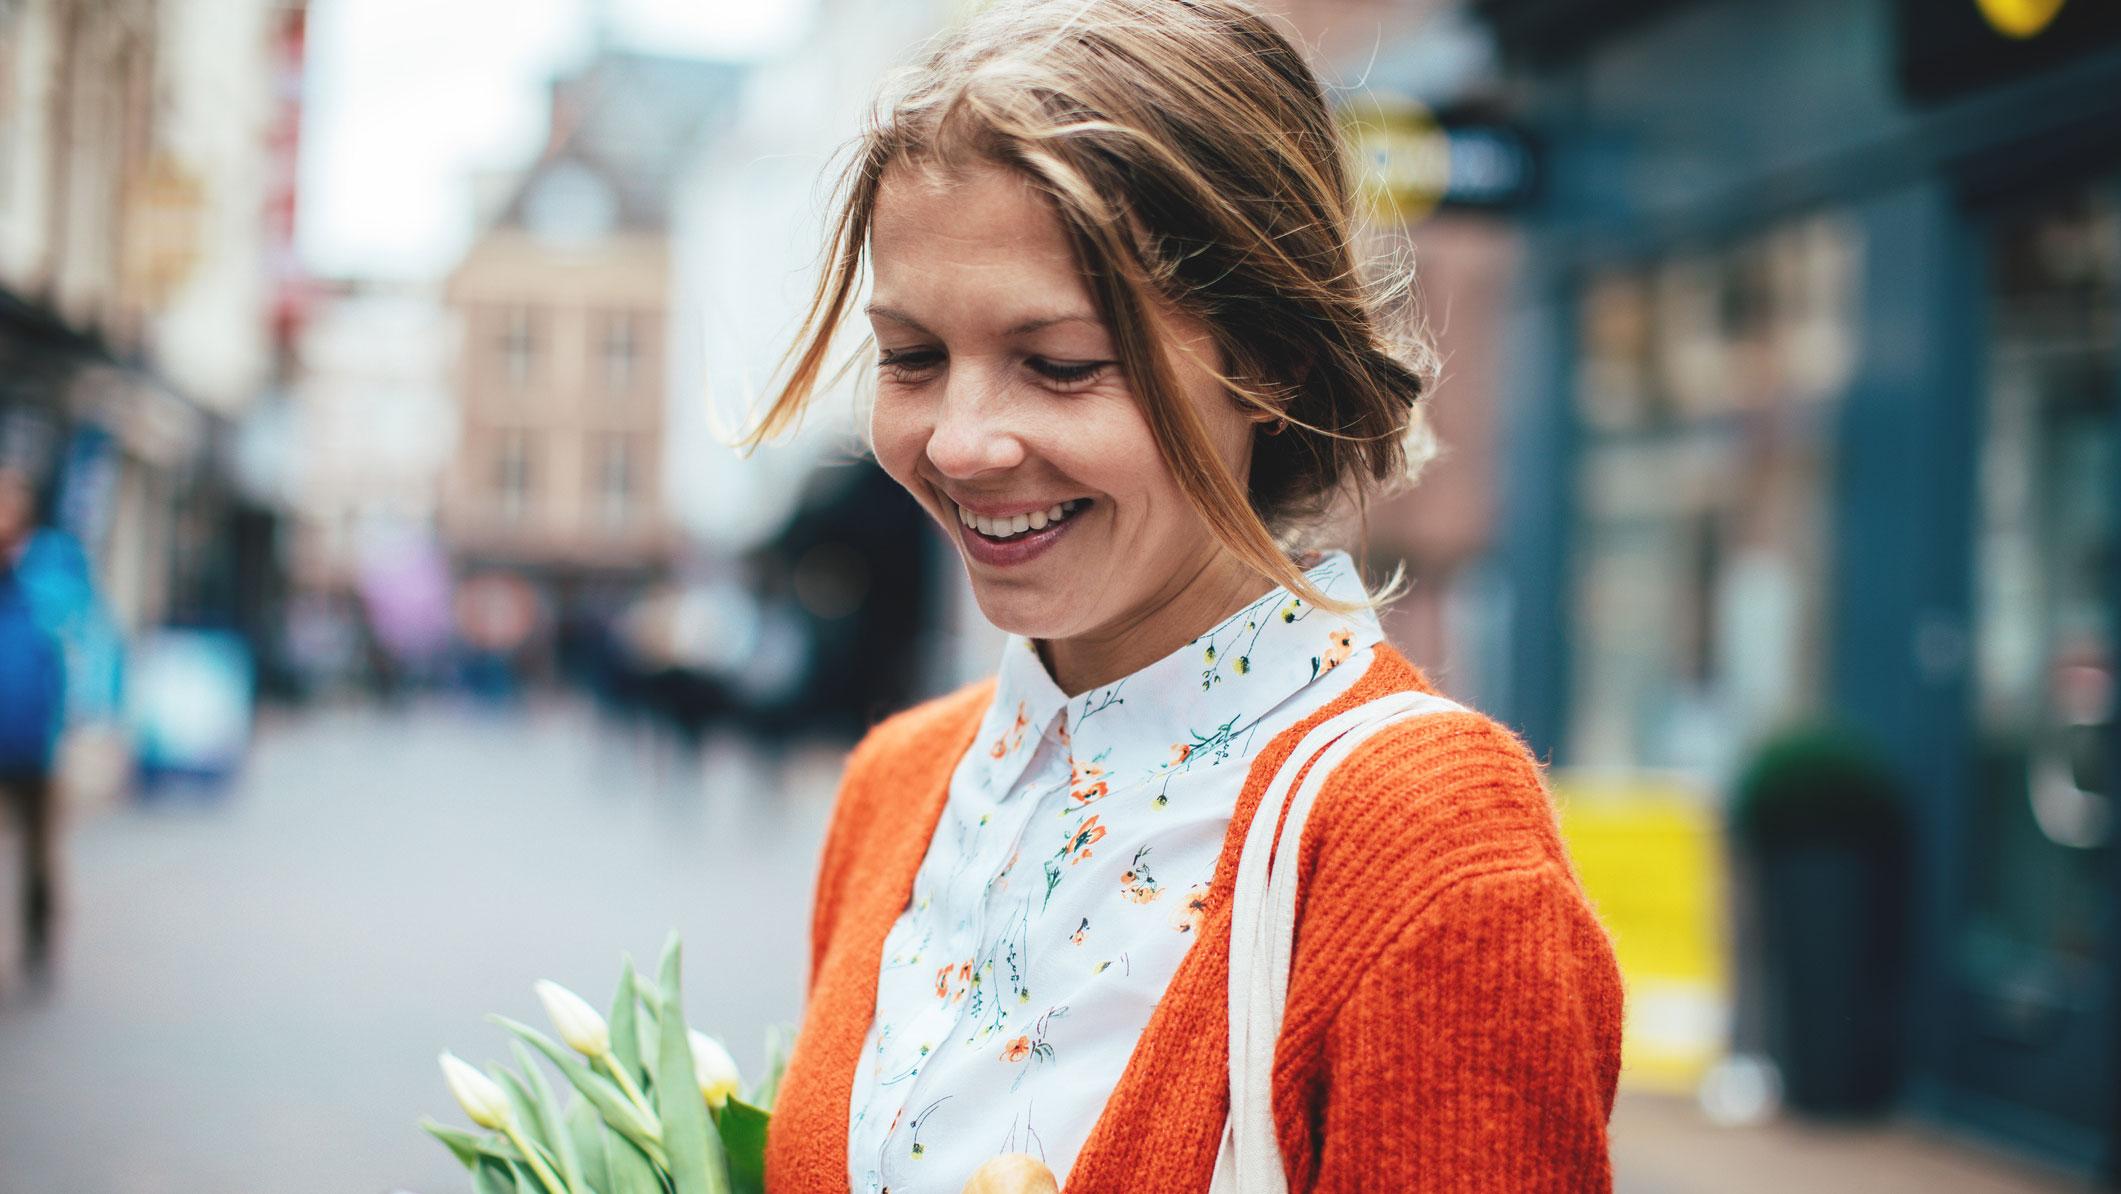 Optimistisk kvinde med blomster i favnen smiler og kigger ned